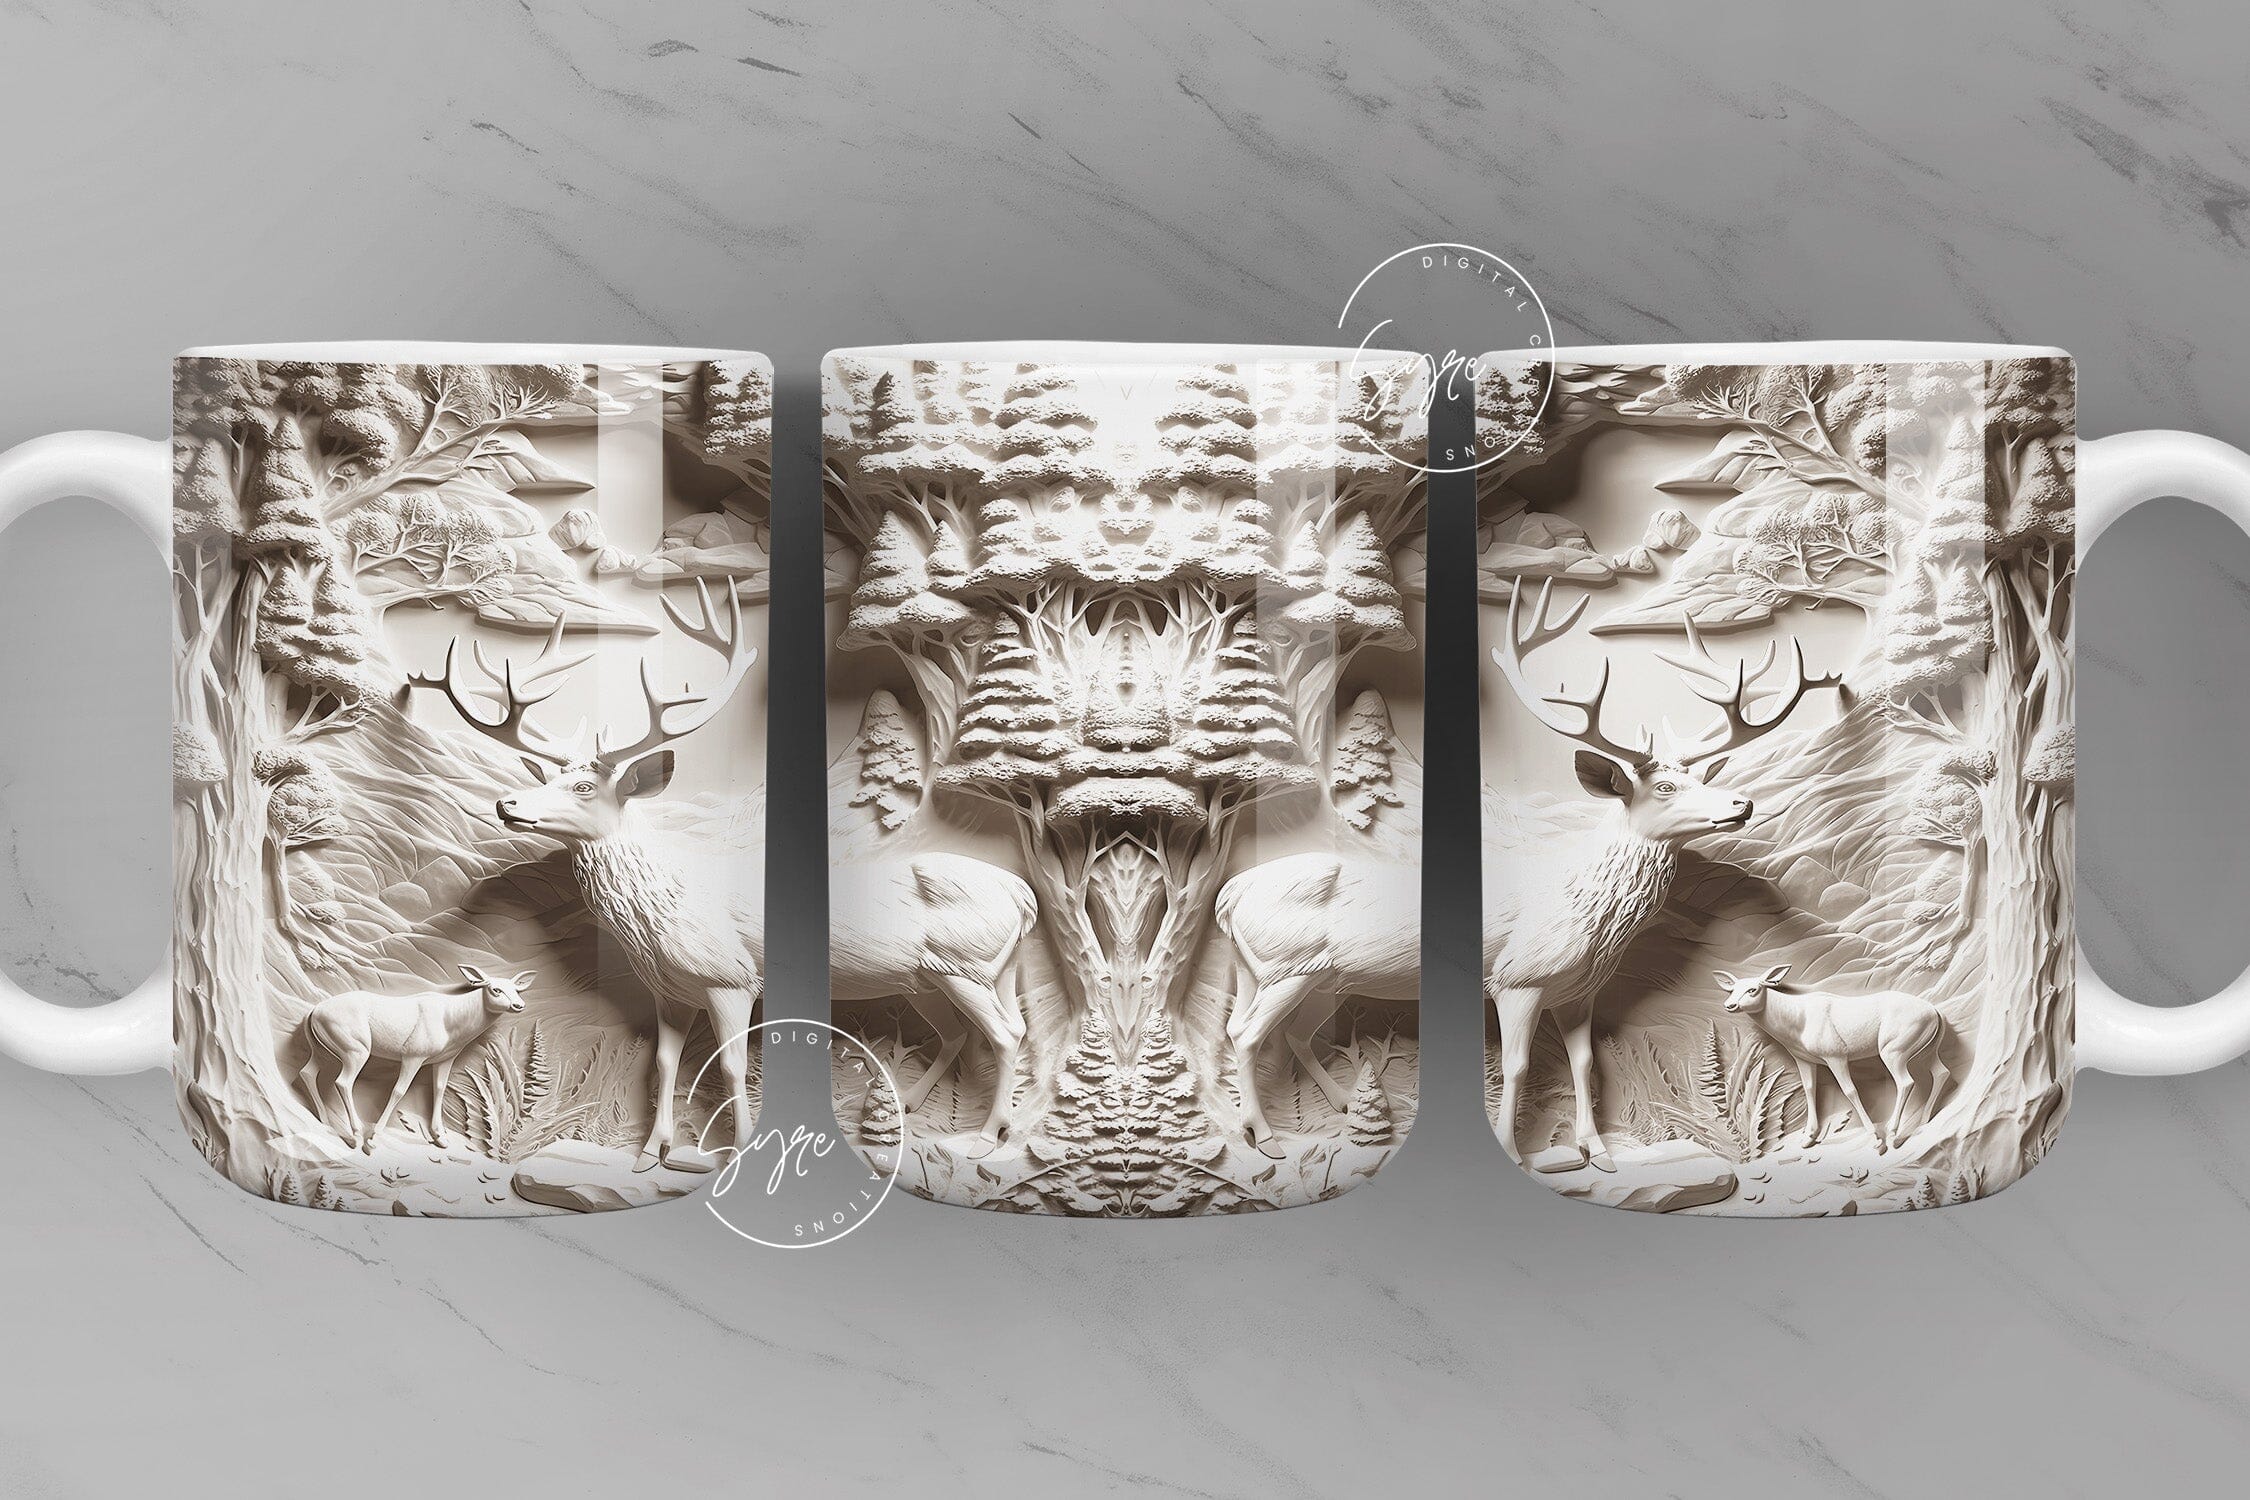  Atlodas Bookworm Mug, Creative 3D Print Bookshelf Mug,  Personalise Space Design Multi-Purpose Ceramic Mug, Perfect for Gifting to  Book Lovers (A) : Home & Kitchen